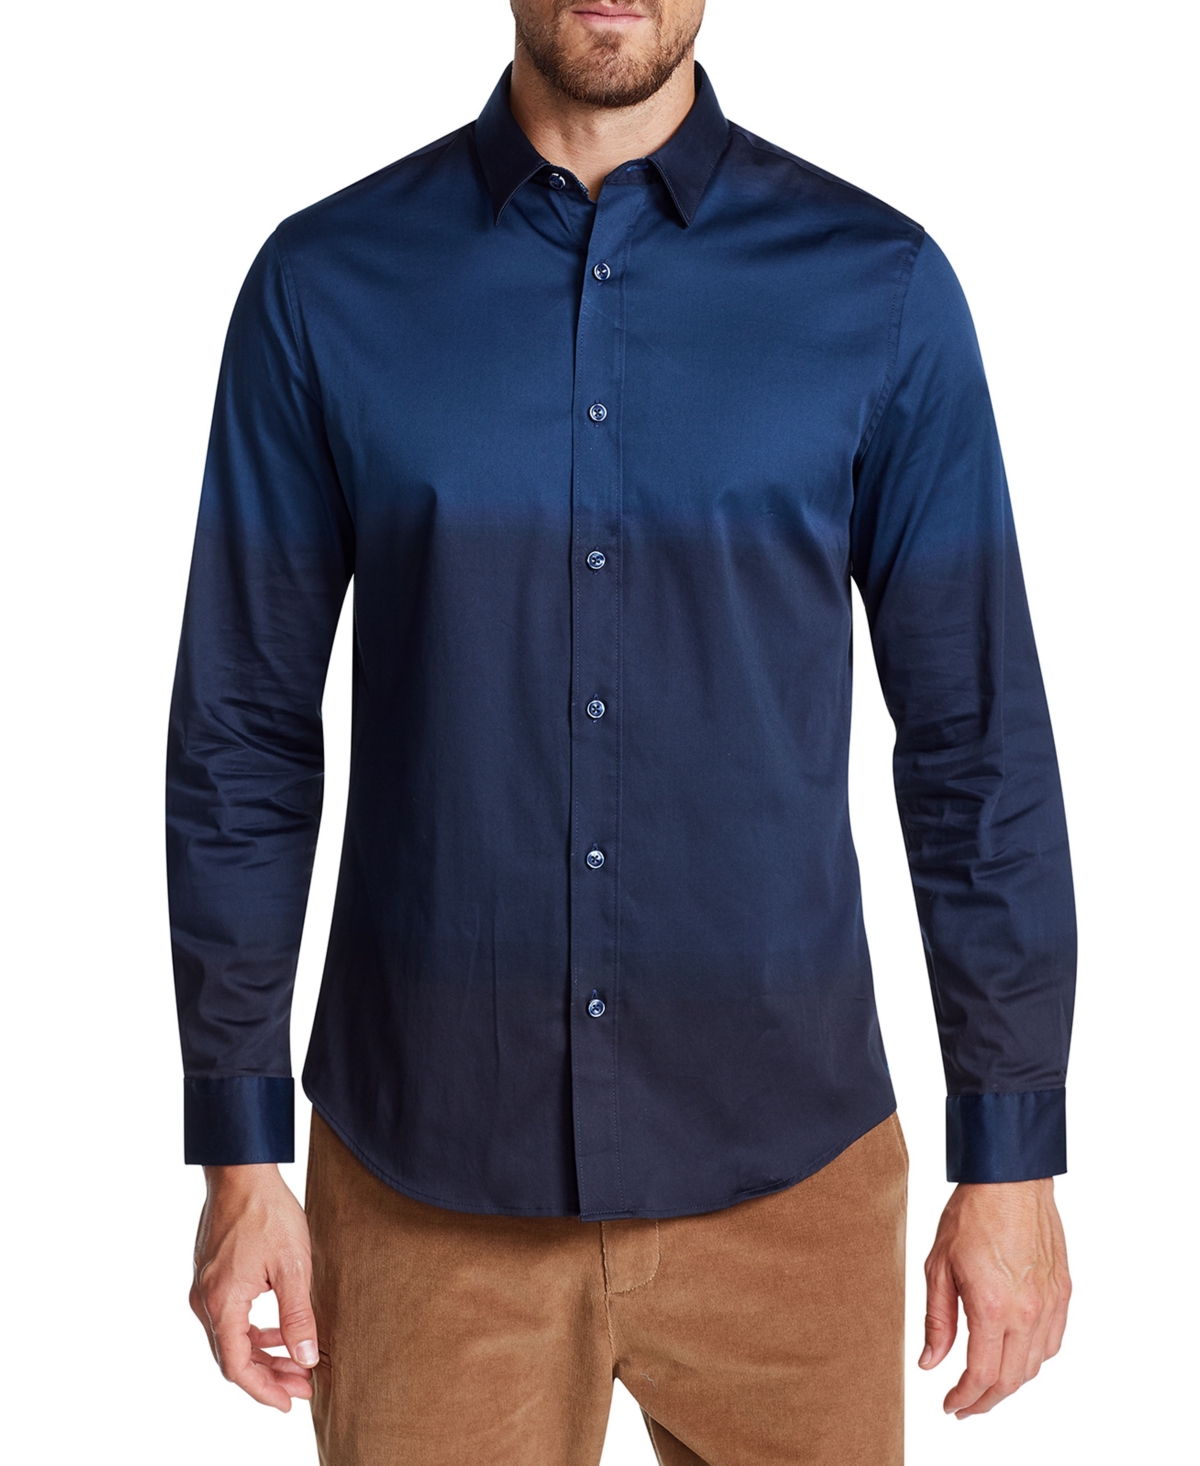 Men's Bahia Long Sleeve Button Up Shirt - Navy